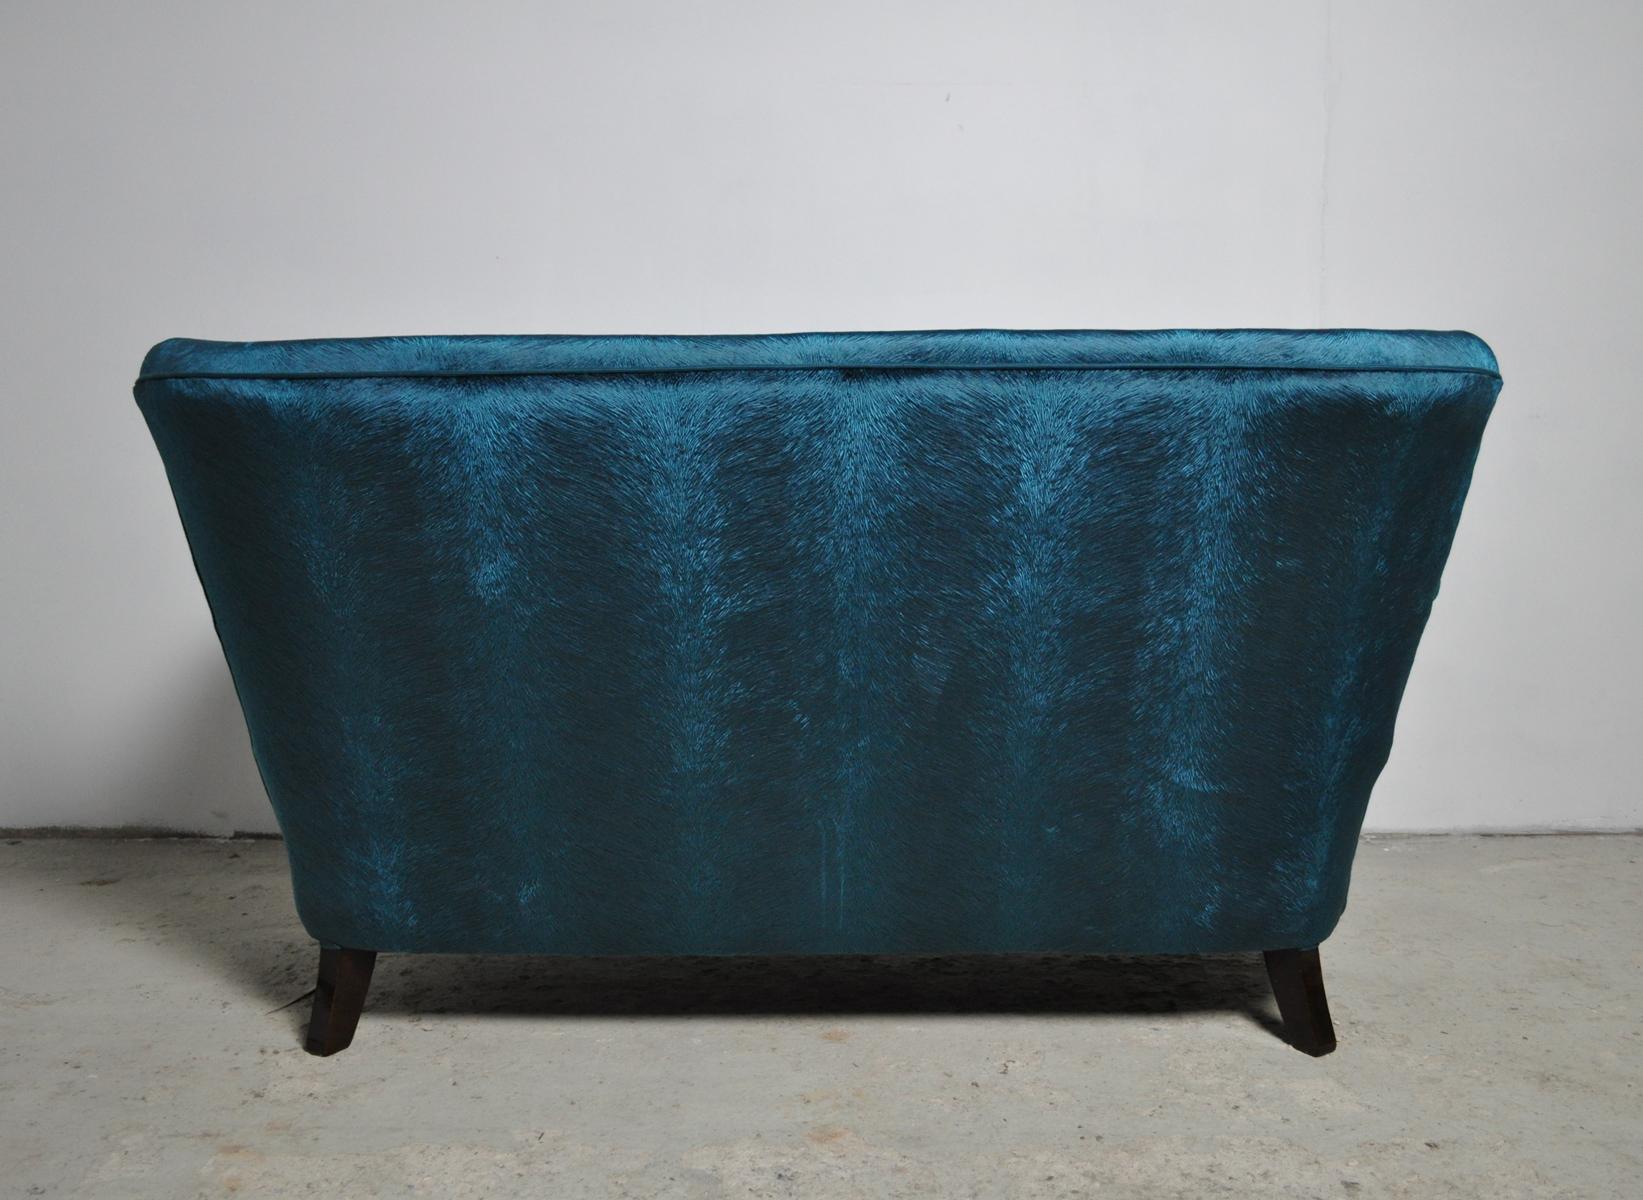 20th Century Elegant Early Midcentury Curved Sofa in Blue Velvet New Upholstery For Sale